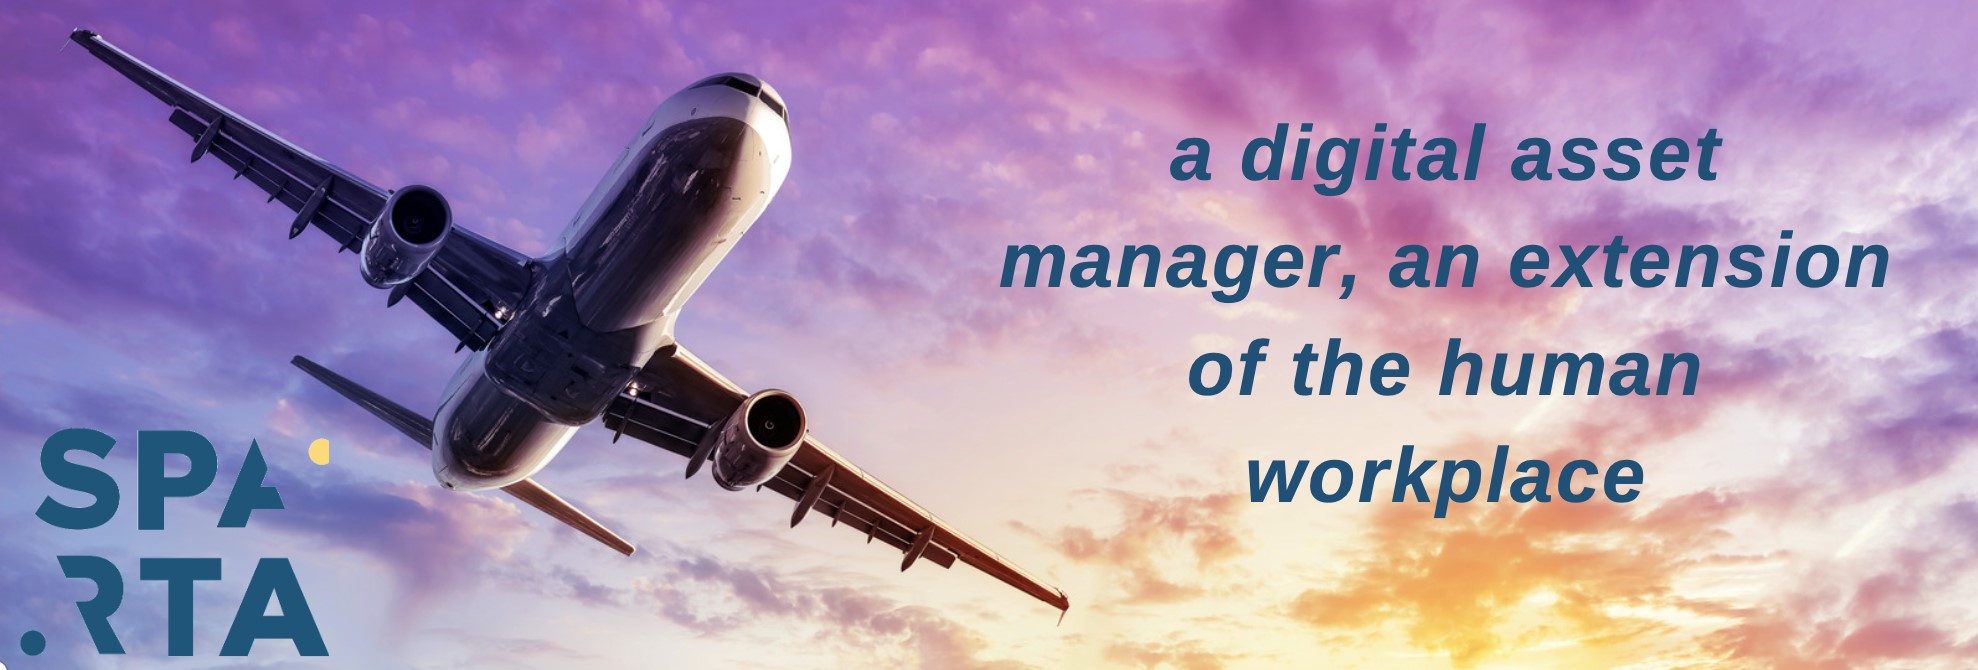 Acumen Aviation Releases revamped version of SPARTA – Digital Asset Manager